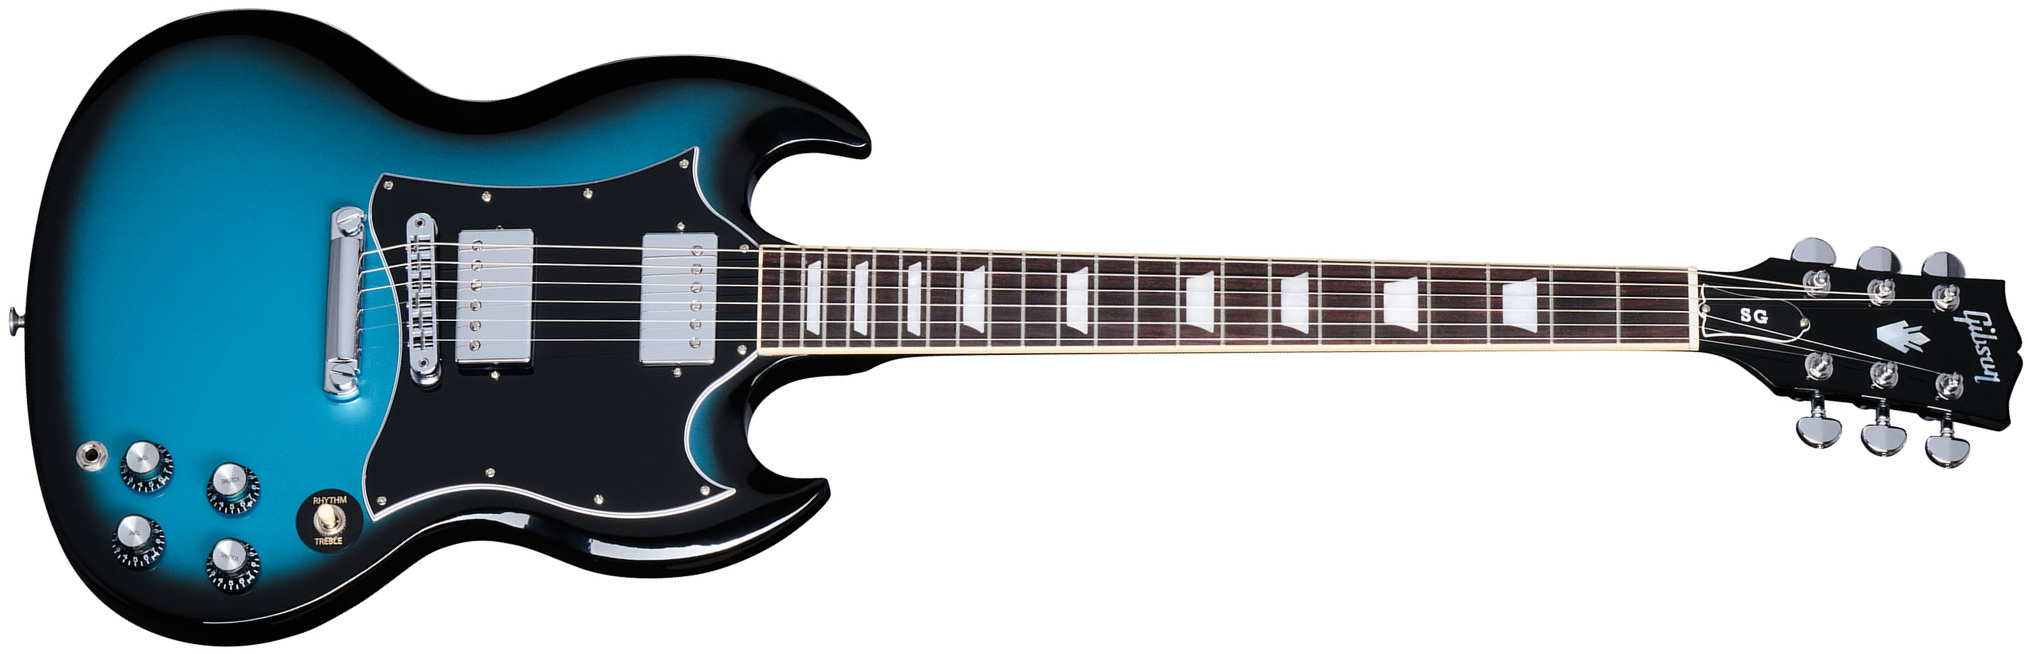 Gibson Sg Standard Custom Color 2h Ht Rw - Pelham Blue Burst - Double cut electric guitar - Main picture